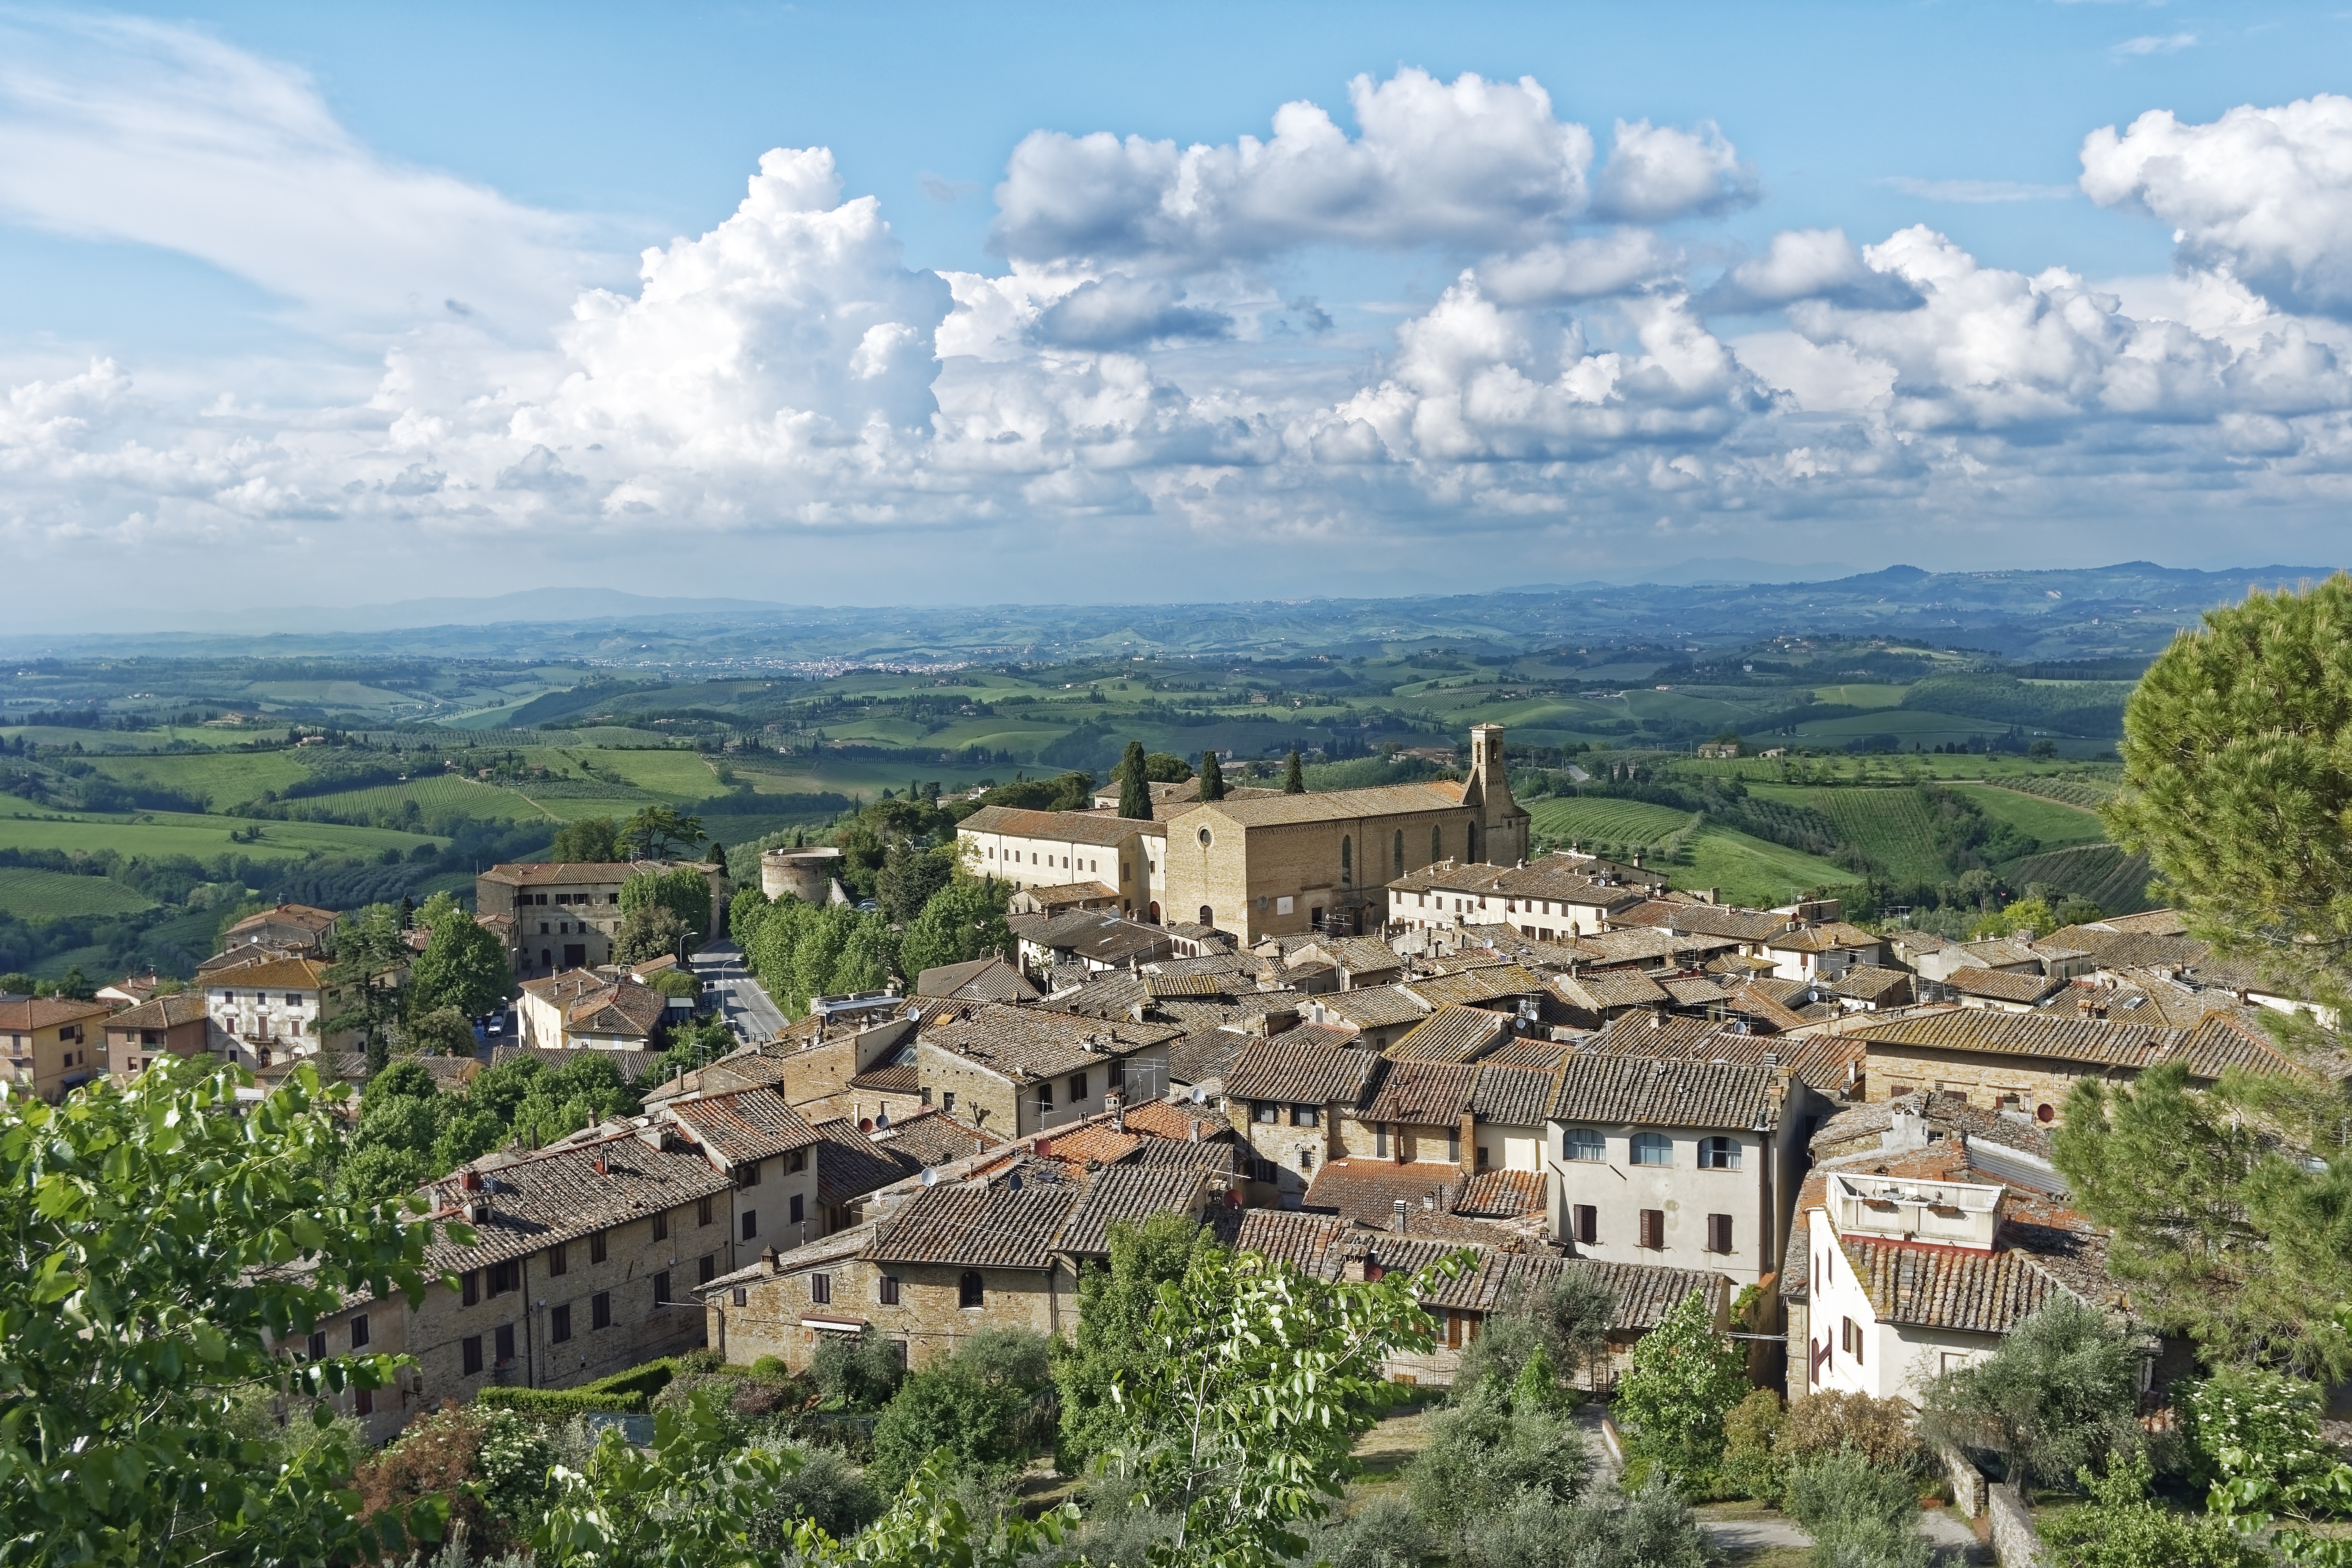 Tuscan Villages - San Gimignano, Italy